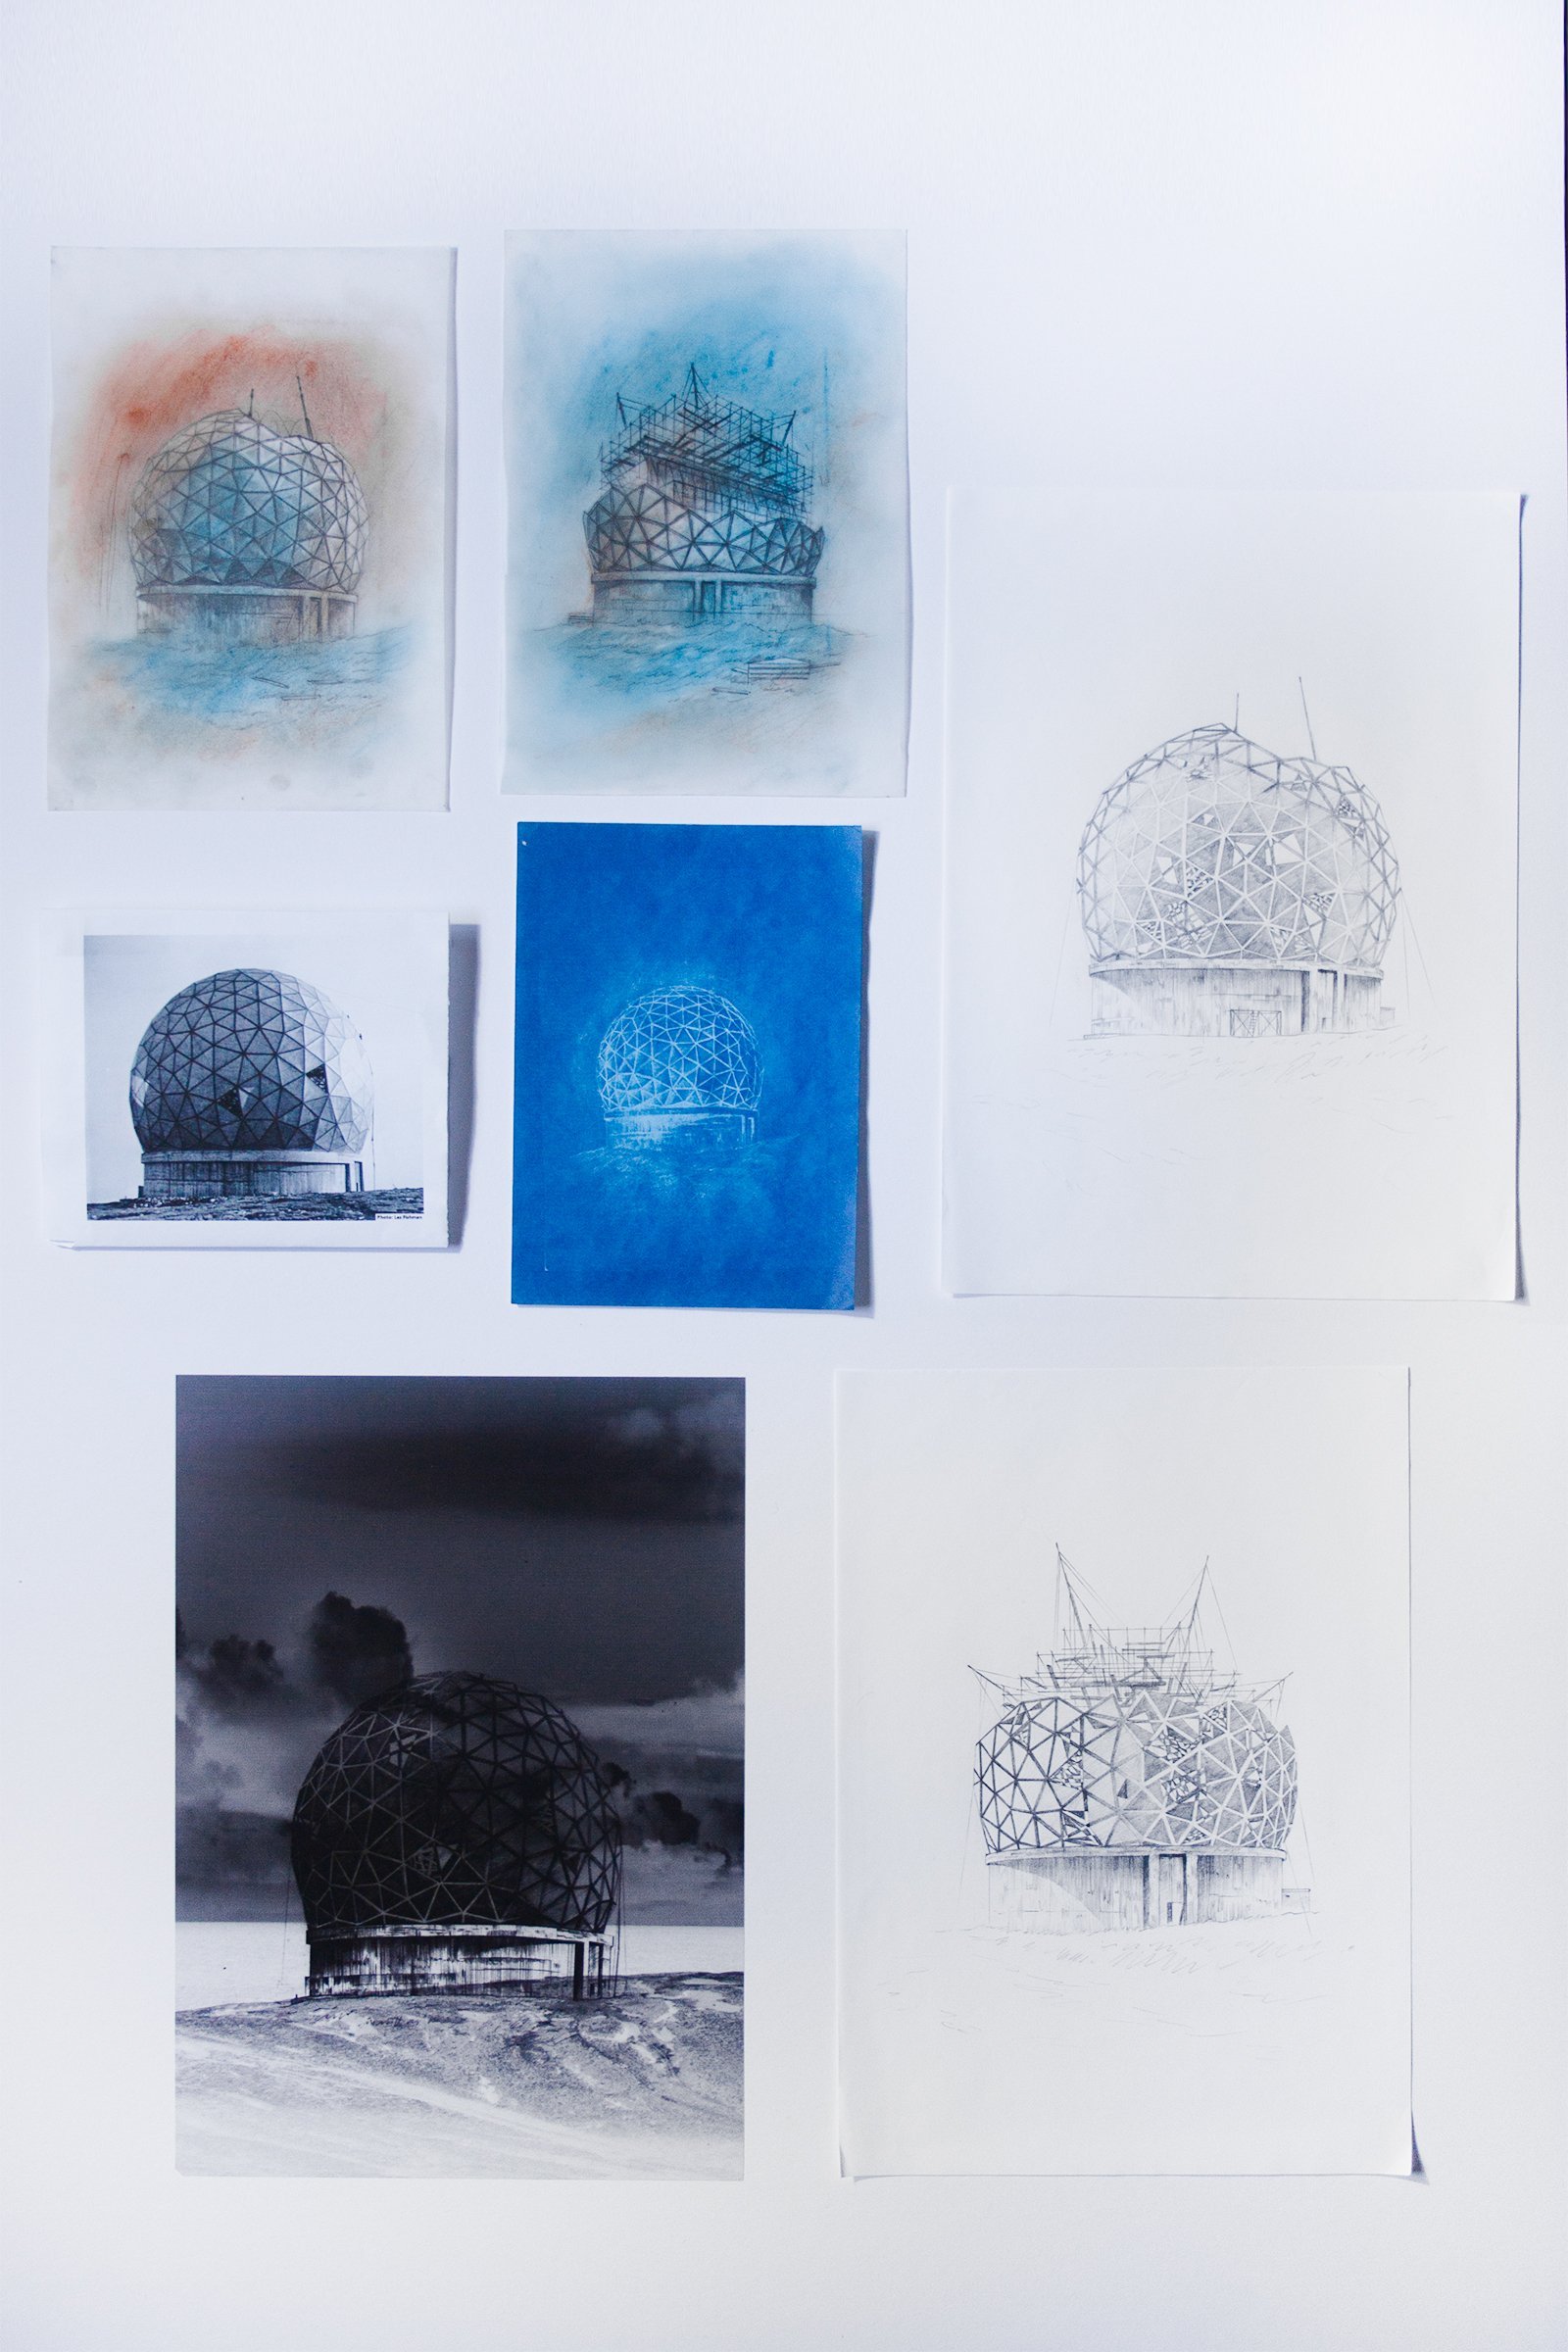 Radome ideas, 2015 – 2021, drawings, cyanotype, digital print on acetate. 